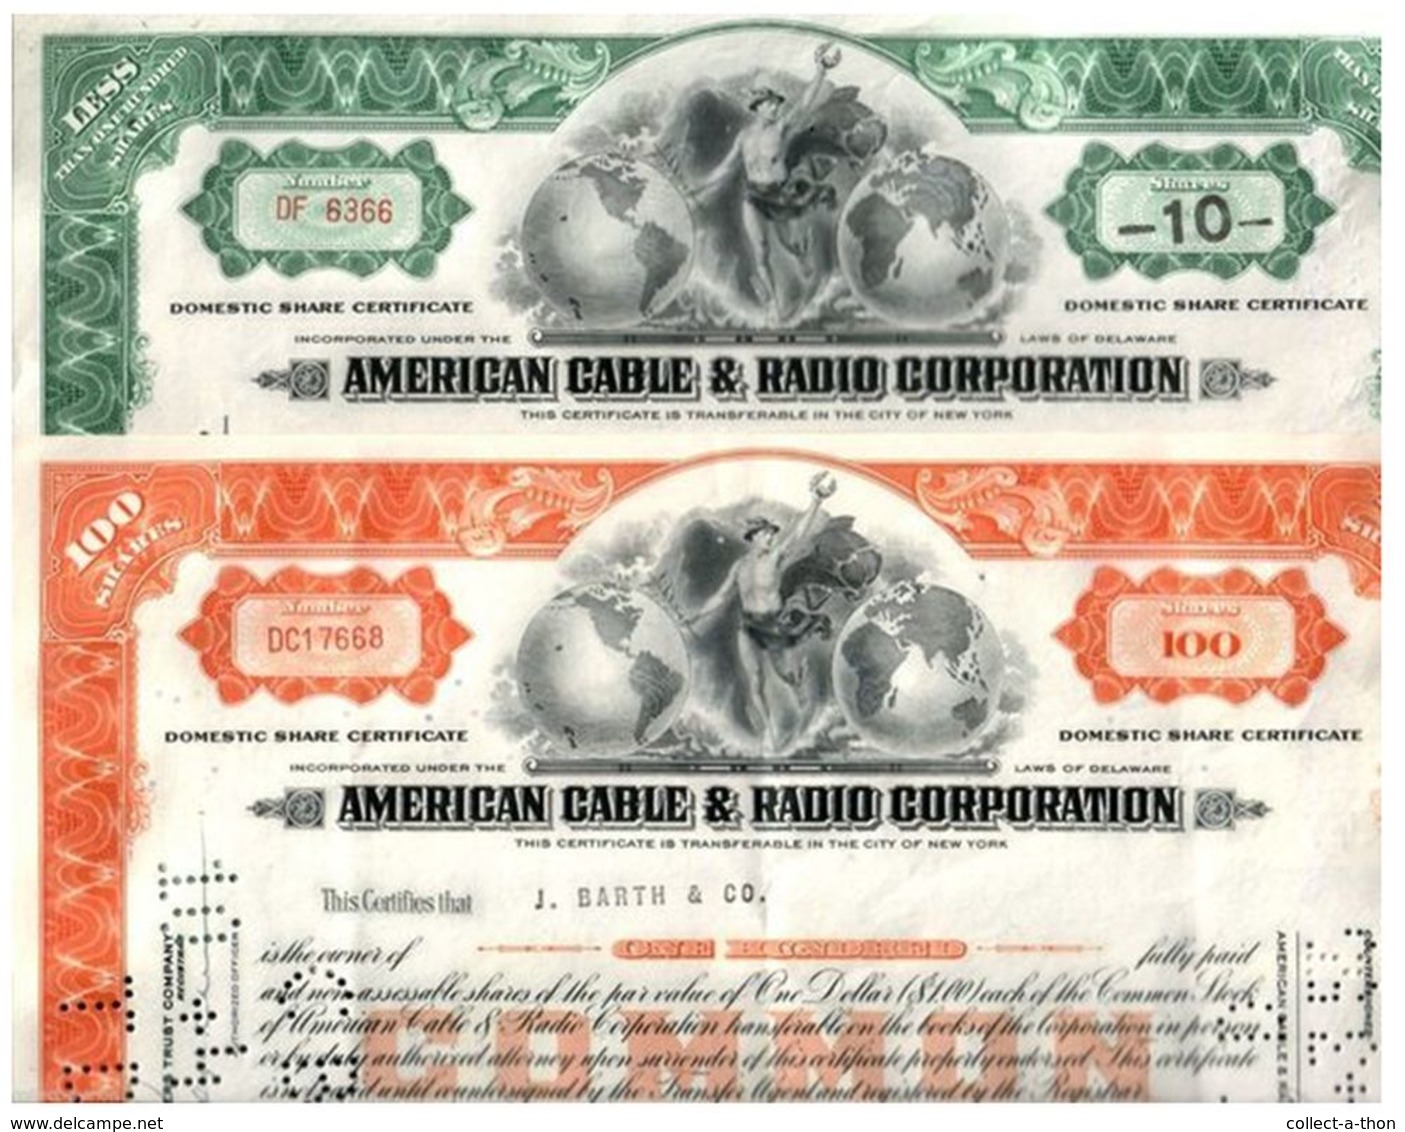 200 AMERICAN CABLE & RADIO STOCKS (100 GREEN 100 ORANGE) 1940's-60's BEAUTIFUL ART DECO CERTIFICATES! LOWEST PRICE 25c!! - Lots & Kiloware - Banknotes